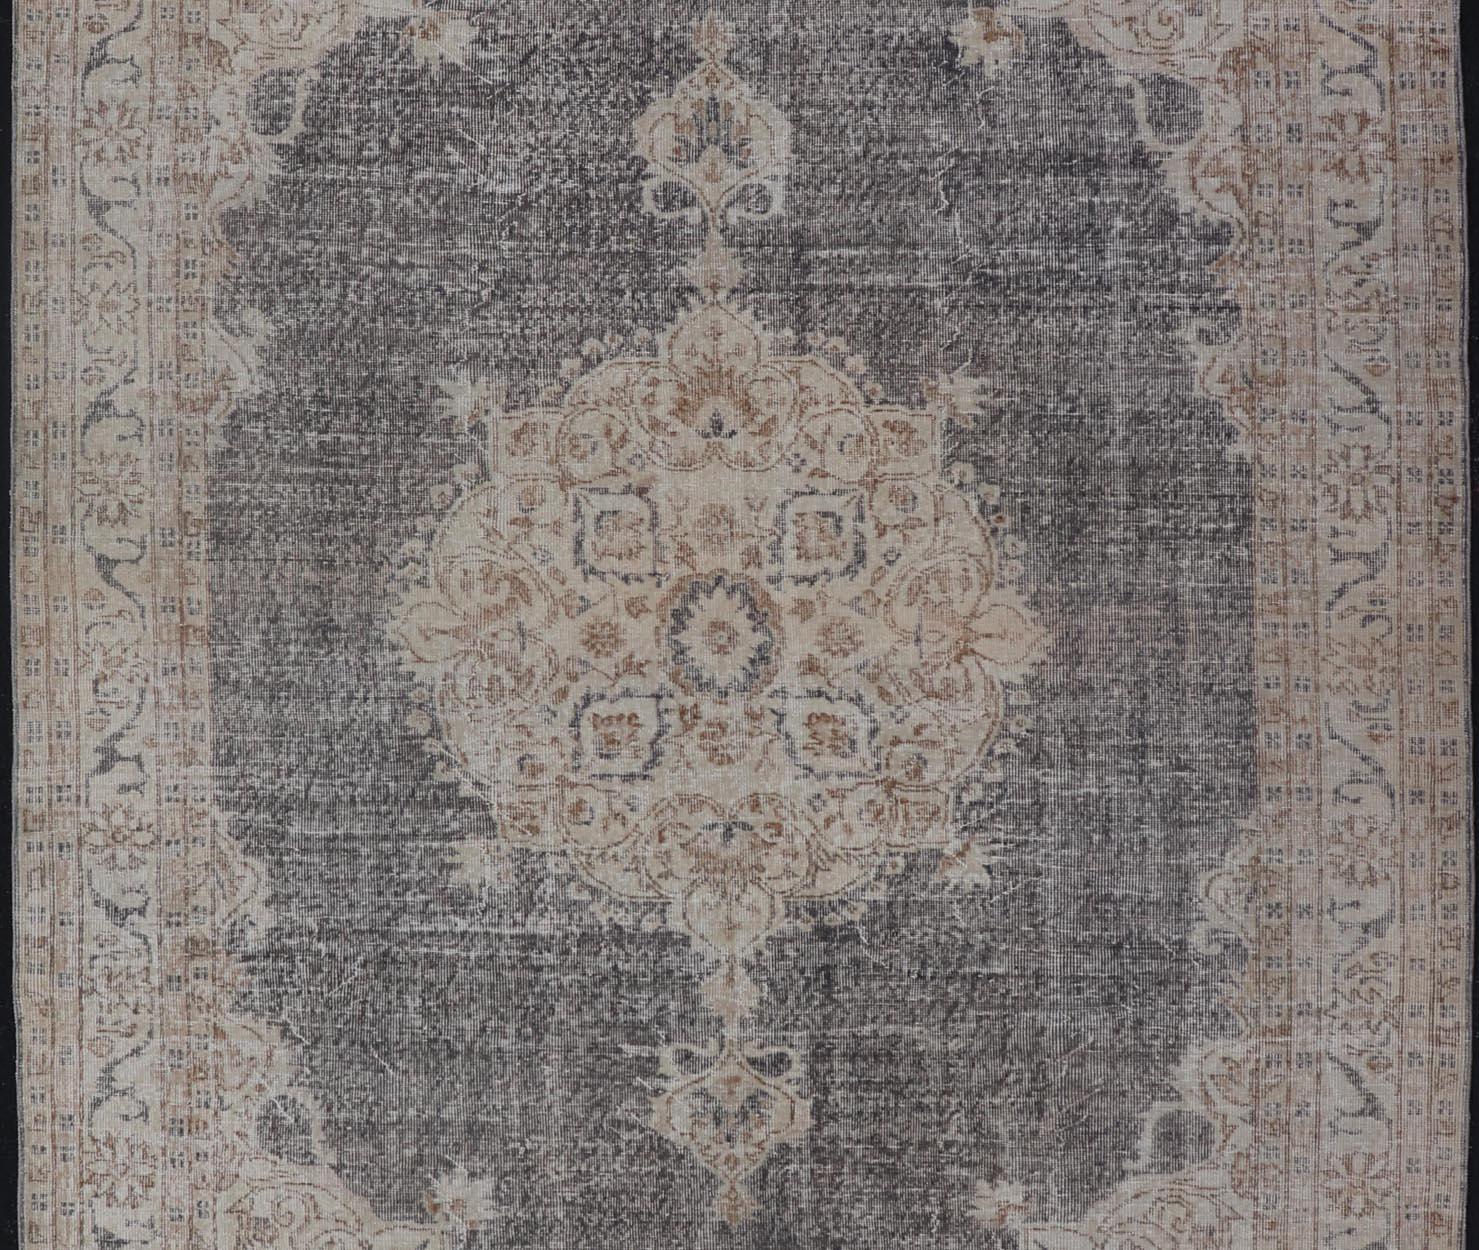 Wool Distressed Turkish Carpet with medallion Design in Dark Gray, Lt. Brown & Cream For Sale